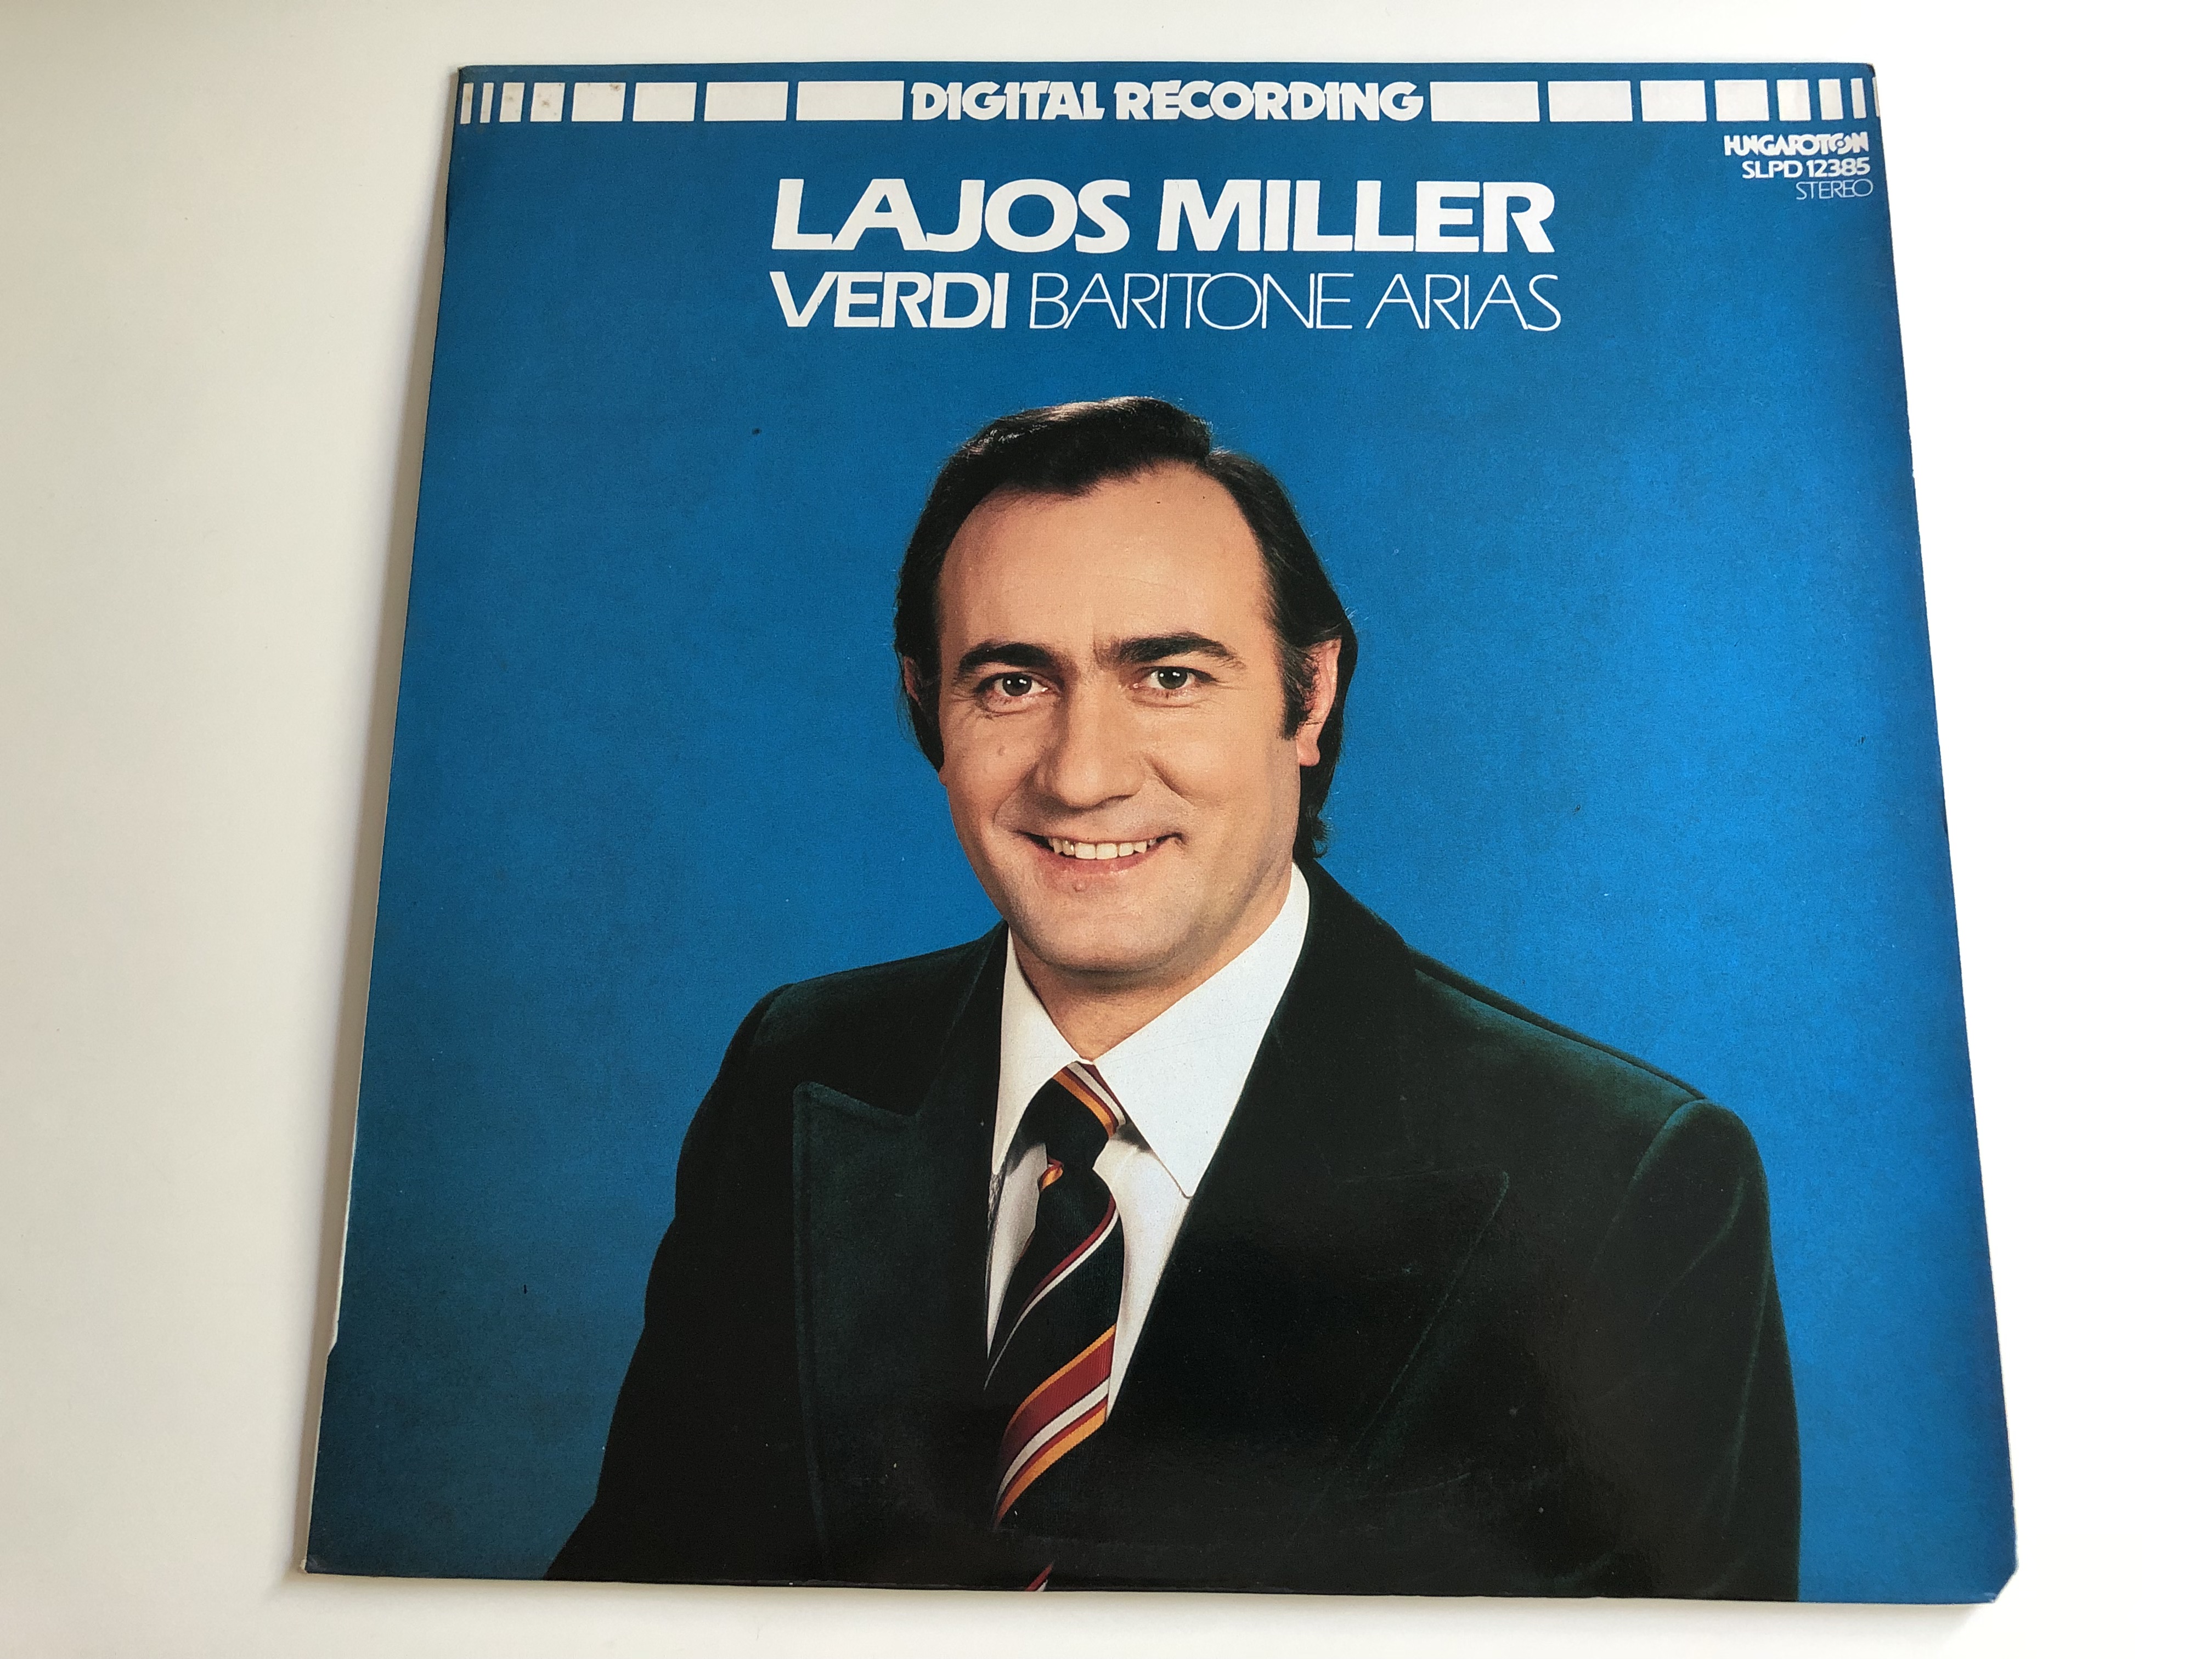 lajos-miller-verdi-baritone-arias-conducted-ferenc-nagy-digital-recording-hungaroton-lp-stereo-slpd-12385-1-.jpg